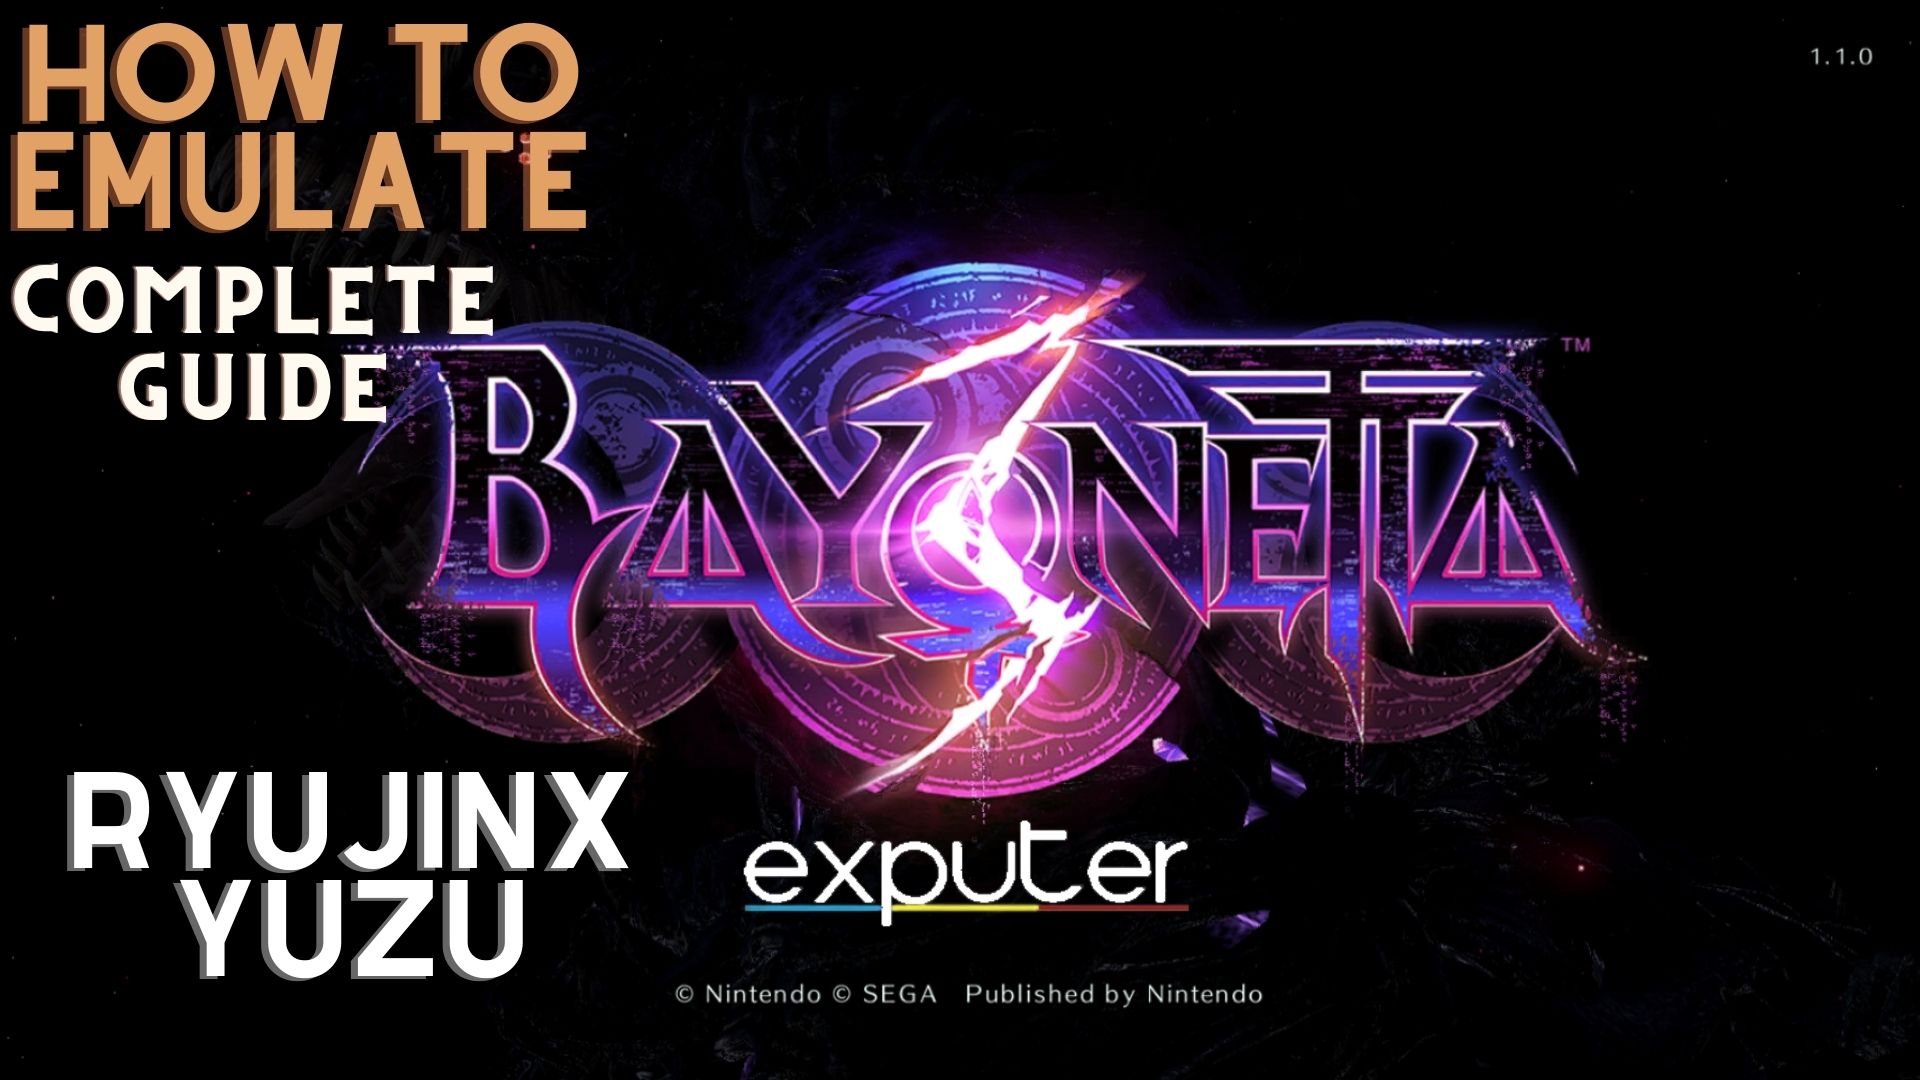 Bayonetta 3 - 01004A4010FEA000 · Issue #4129 · Ryujinx/Ryujinx-Games-List ·  GitHub